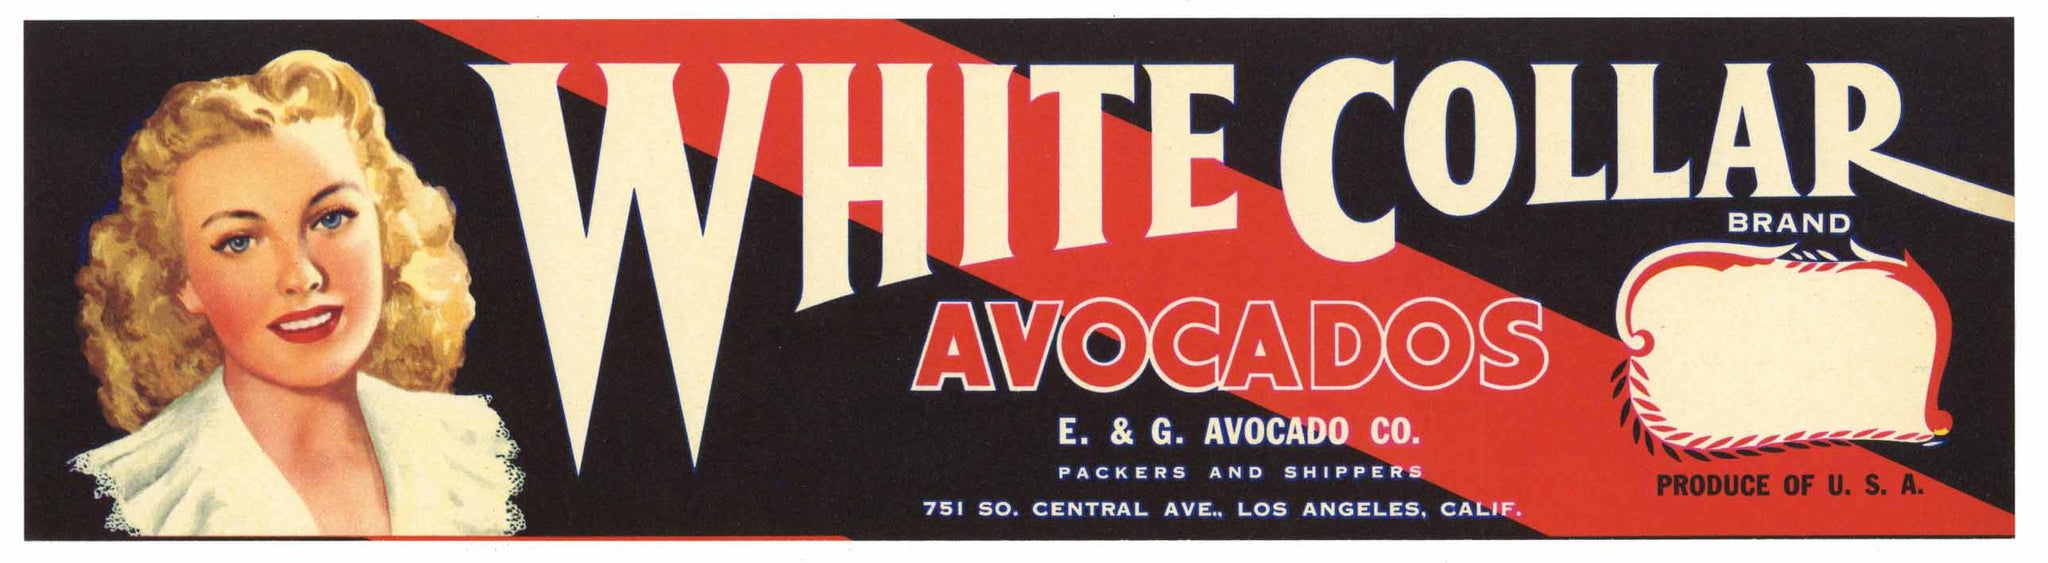 White Collar Brand Vintage Avocado Crate Label